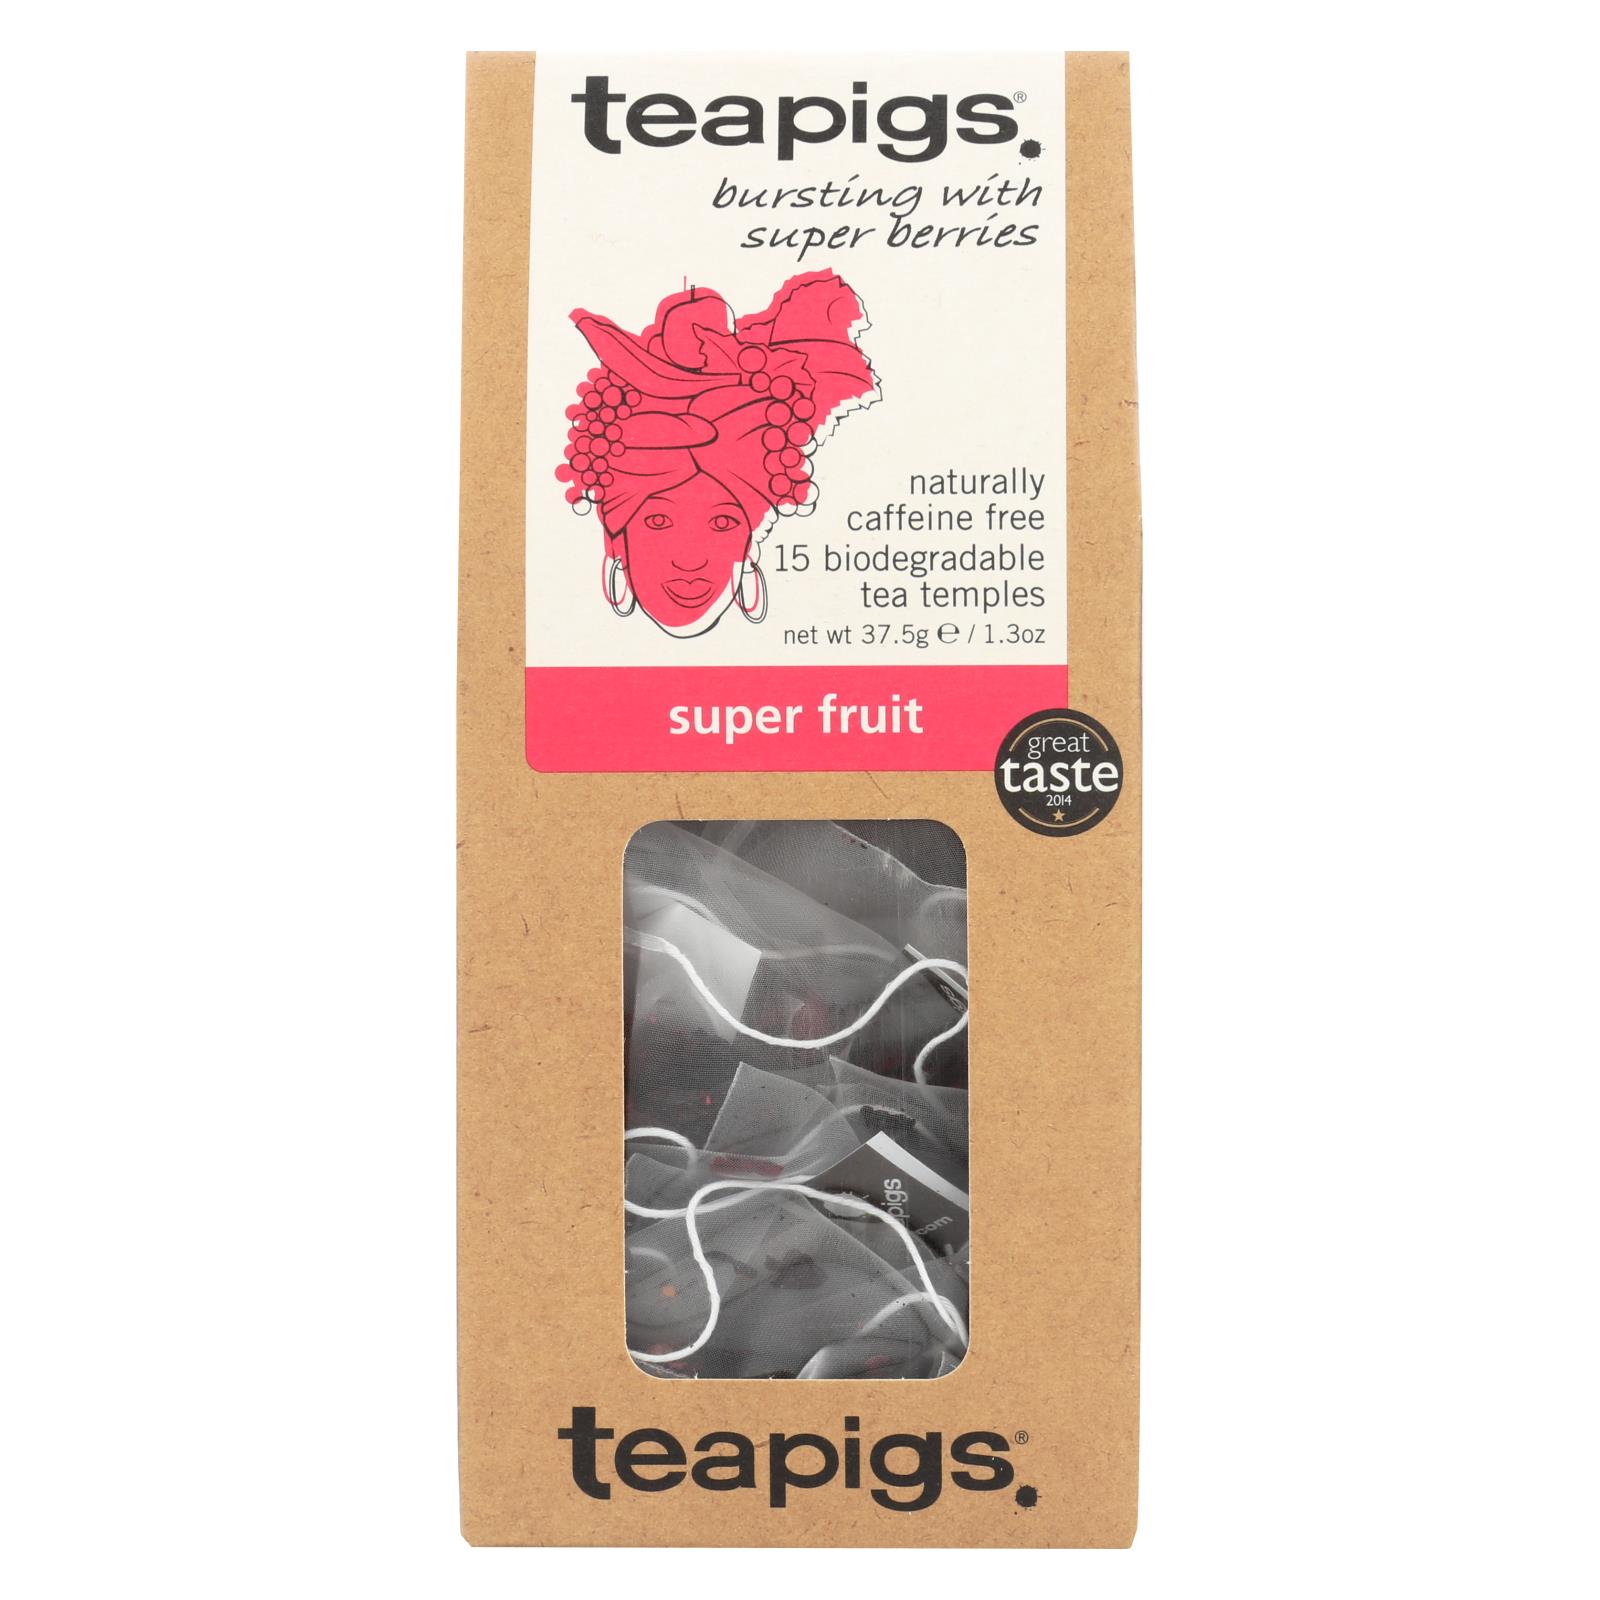 Teapigs Super Fruits Bursting With Super Berries Tea - 6개 묶음상품 - 15 CT